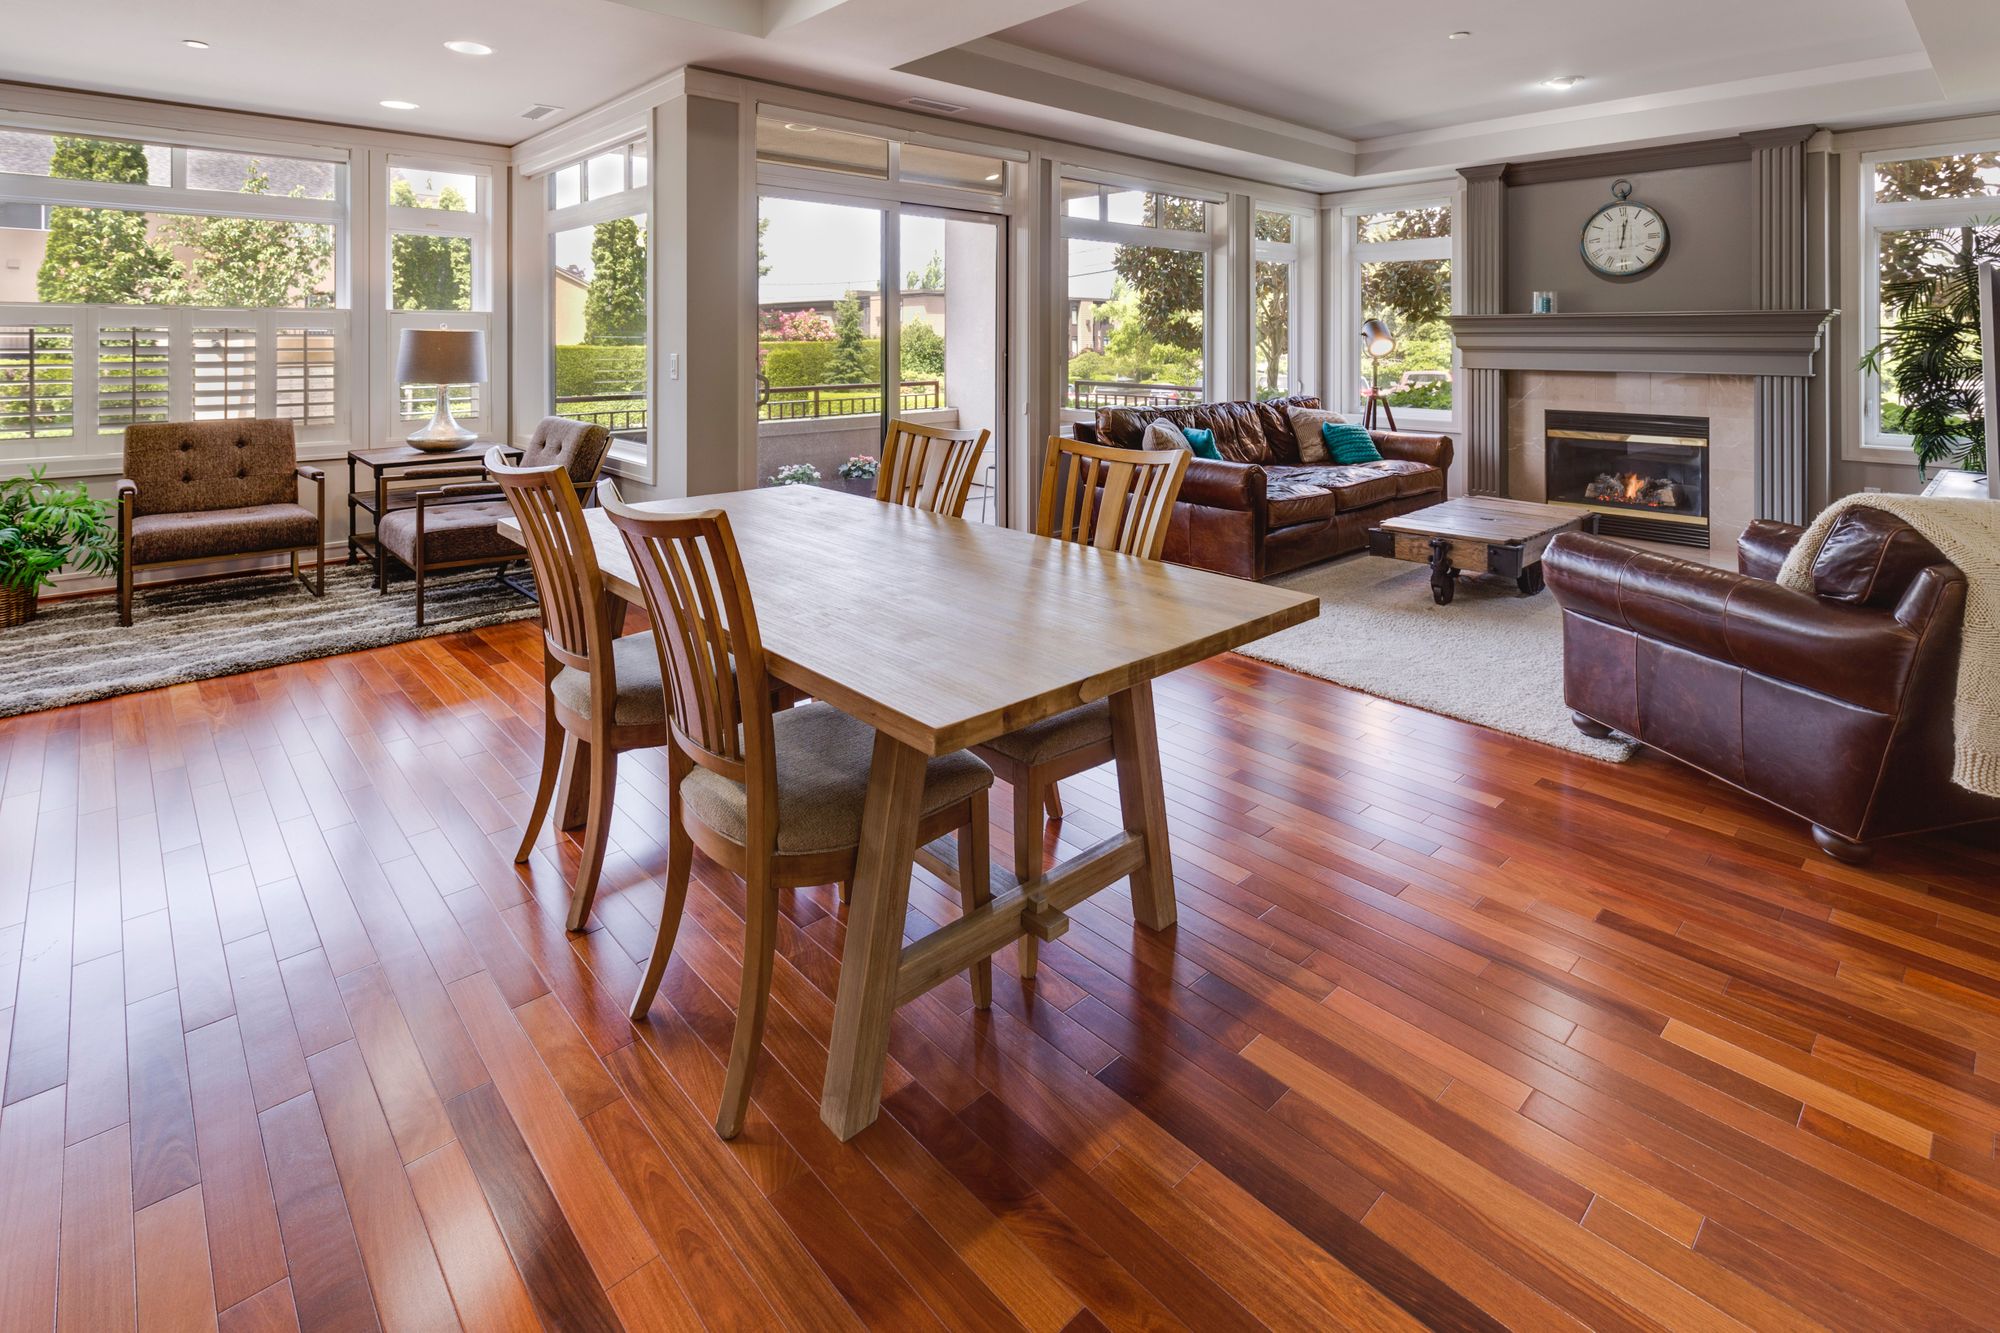 Do Hardwood Floors Increase Home Value, Images Of Hardwood Floors